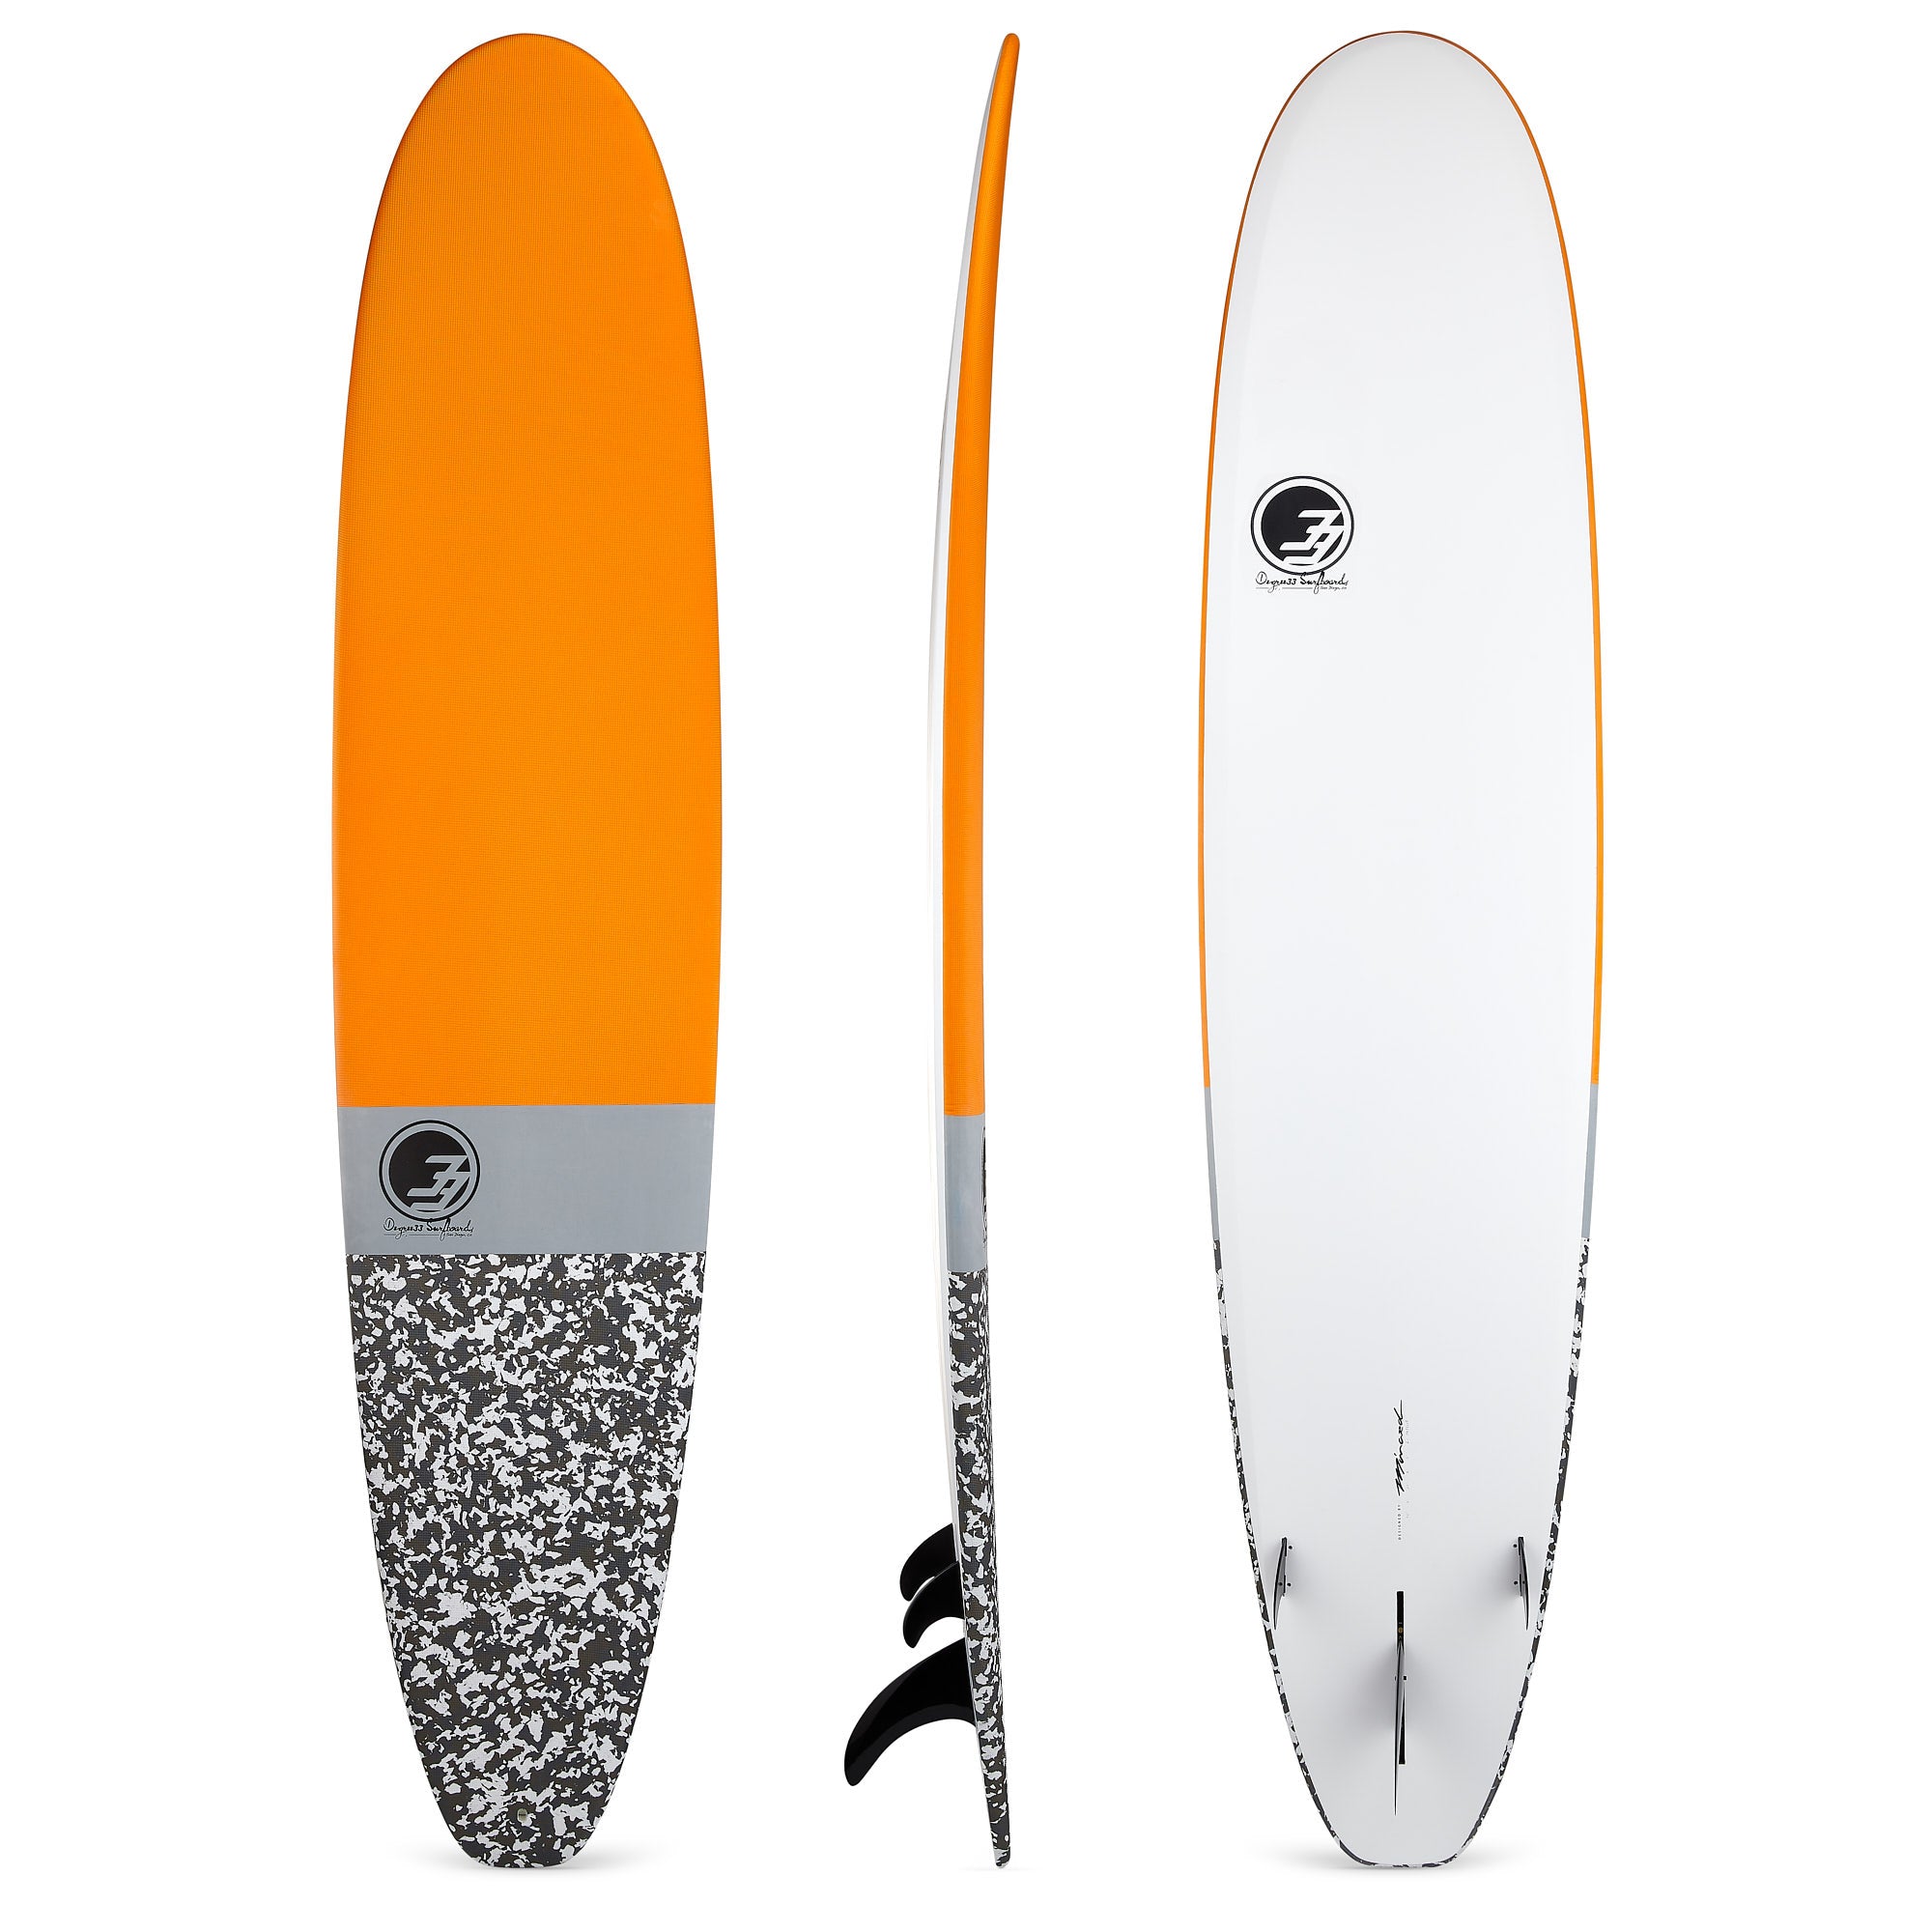 The Ultimate Longboard - Degree 33 Surfboards